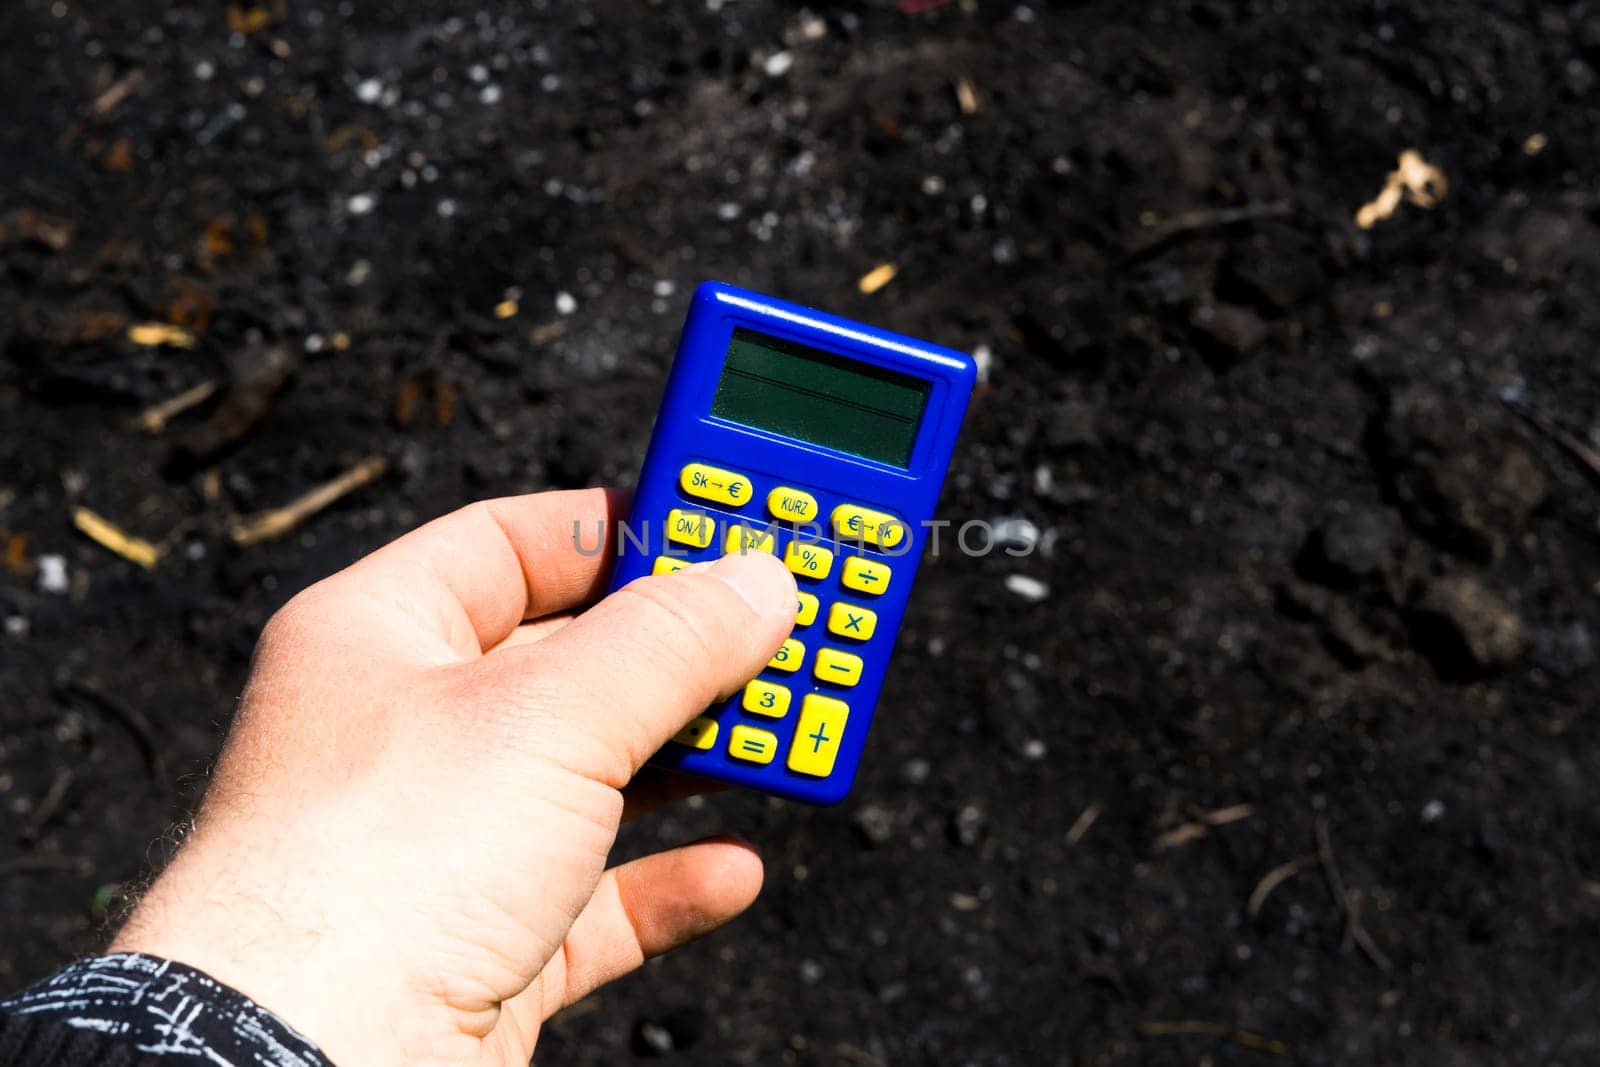 Blue calculator in dark soil, burnt ground after the fire by Zelenin